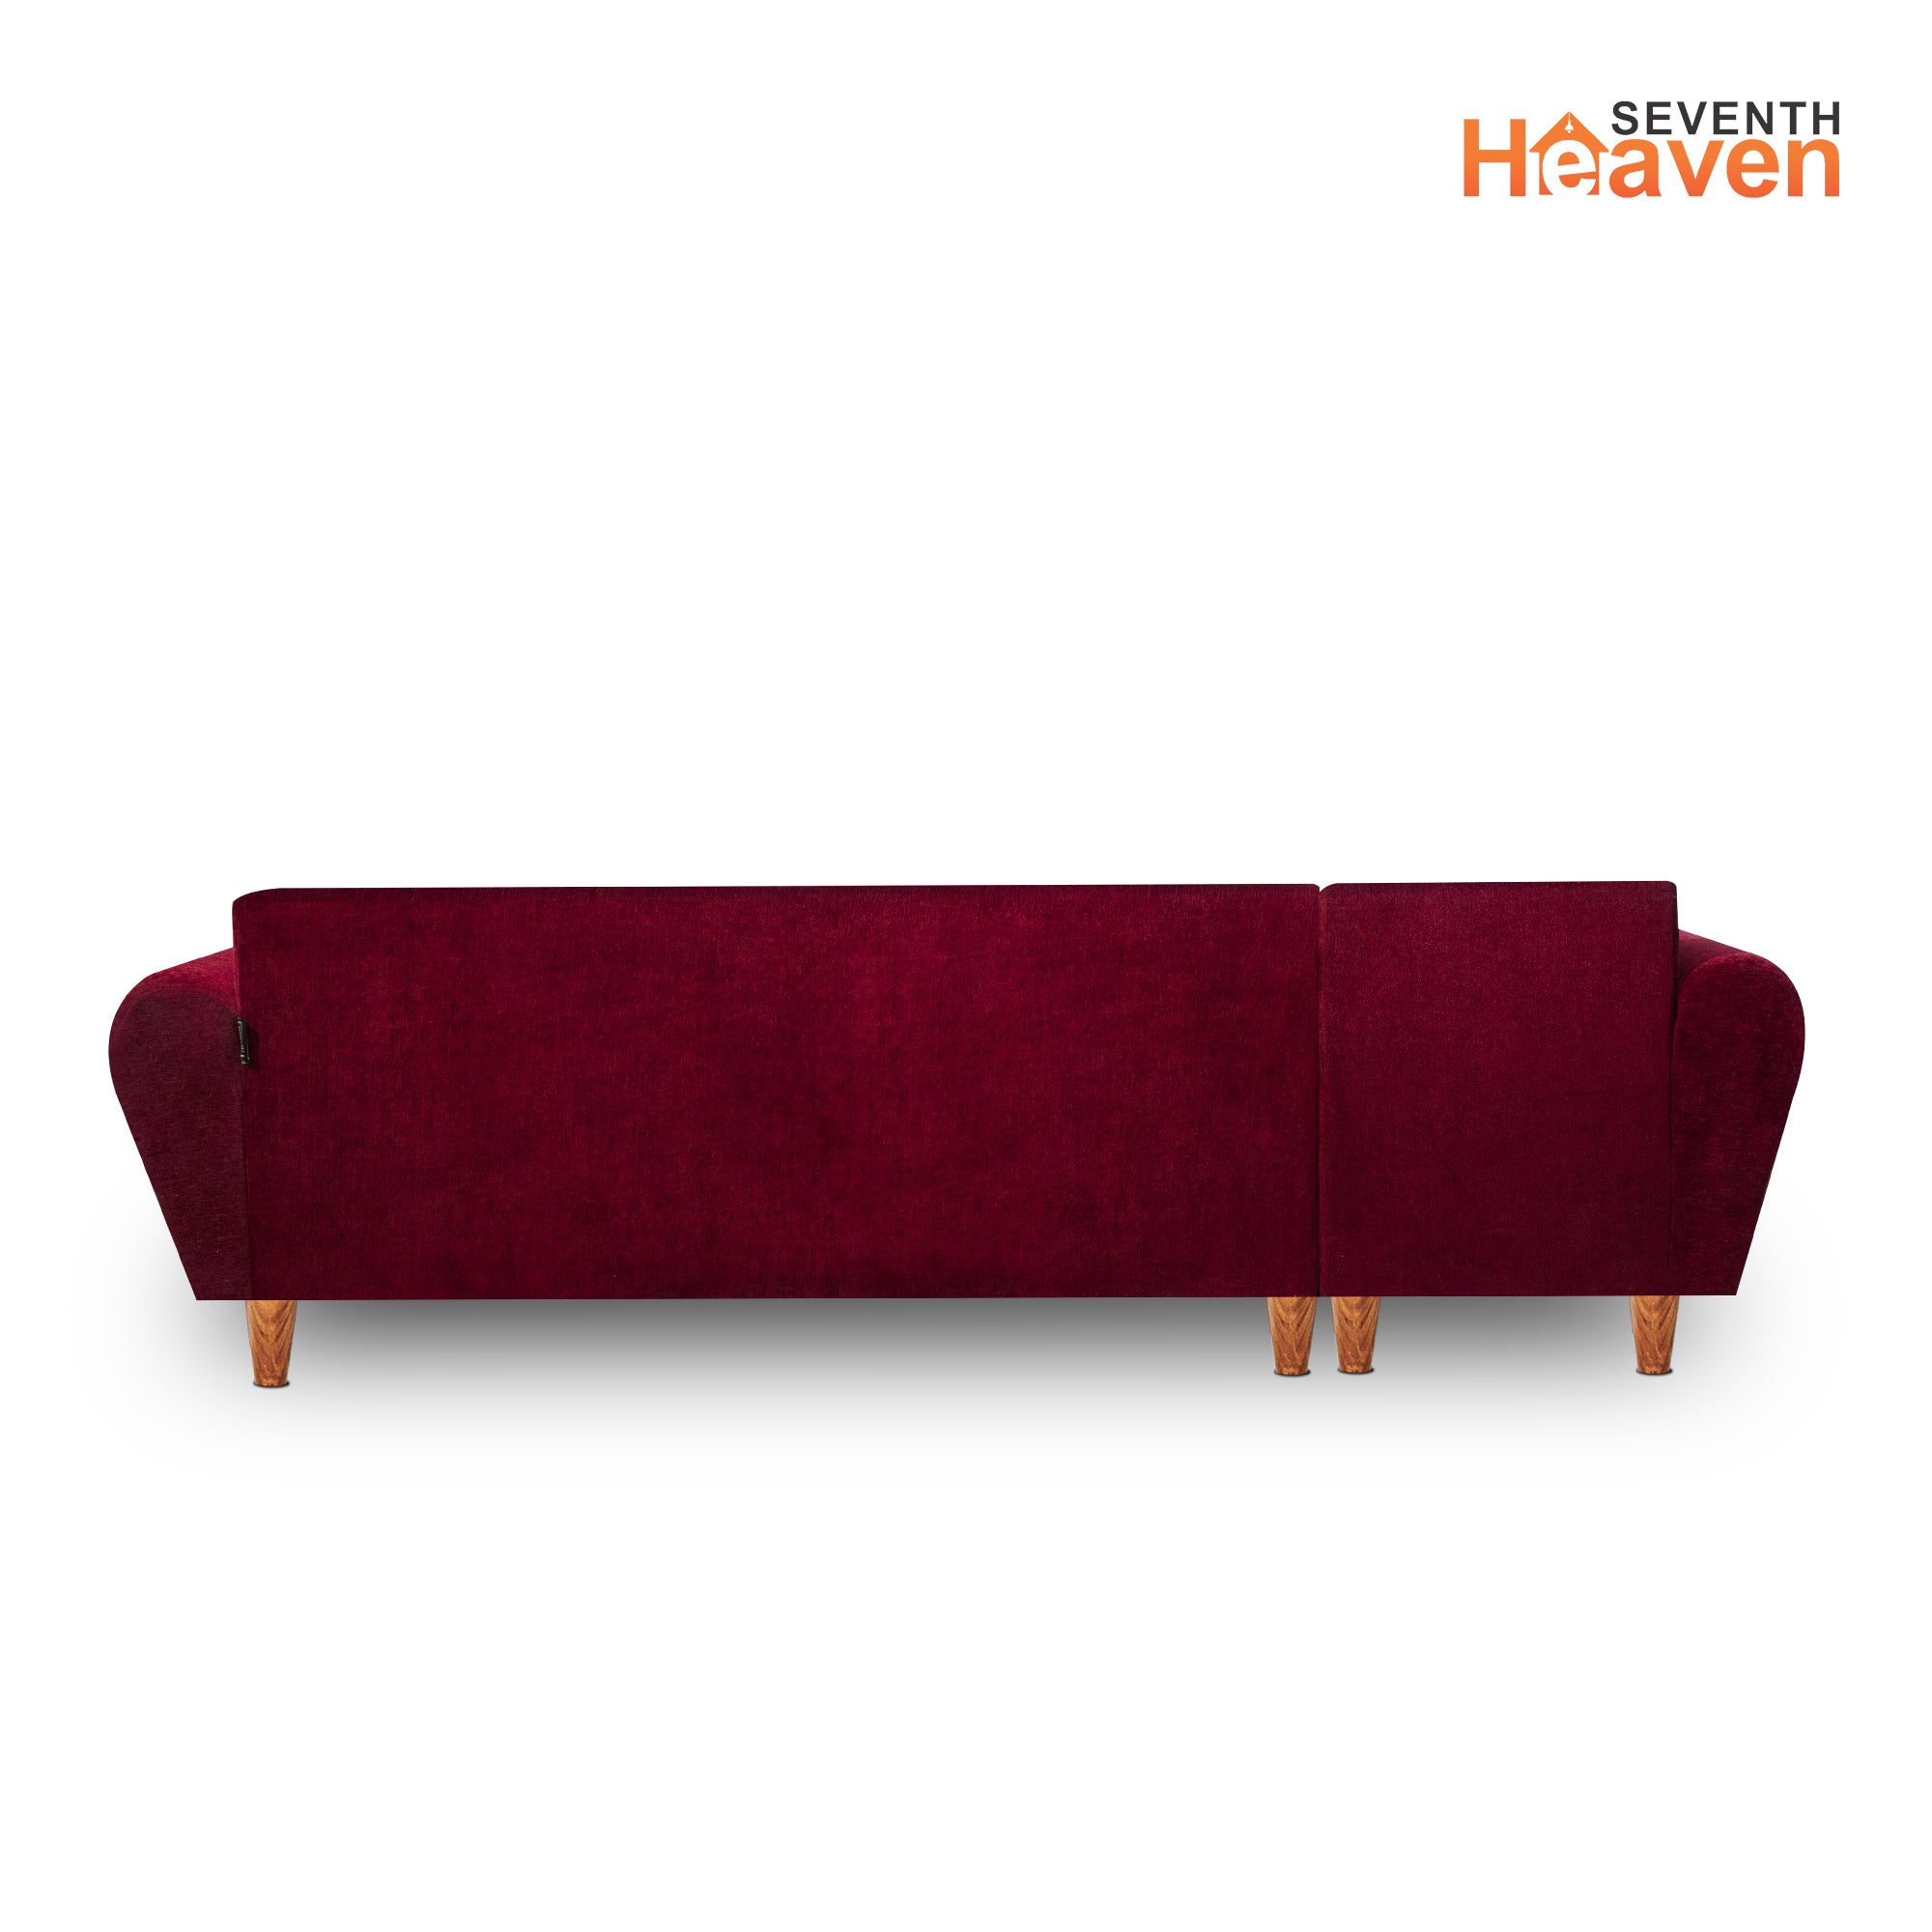 Seventh Heaven Milan 6 Seater Sofa, Extra Spacious, Chenille Molfino Fabric: 3 Year Warranty Fabric 6 Seater Sofa  (Finish Color - Maroon, DIY(Do-It-Yourself))